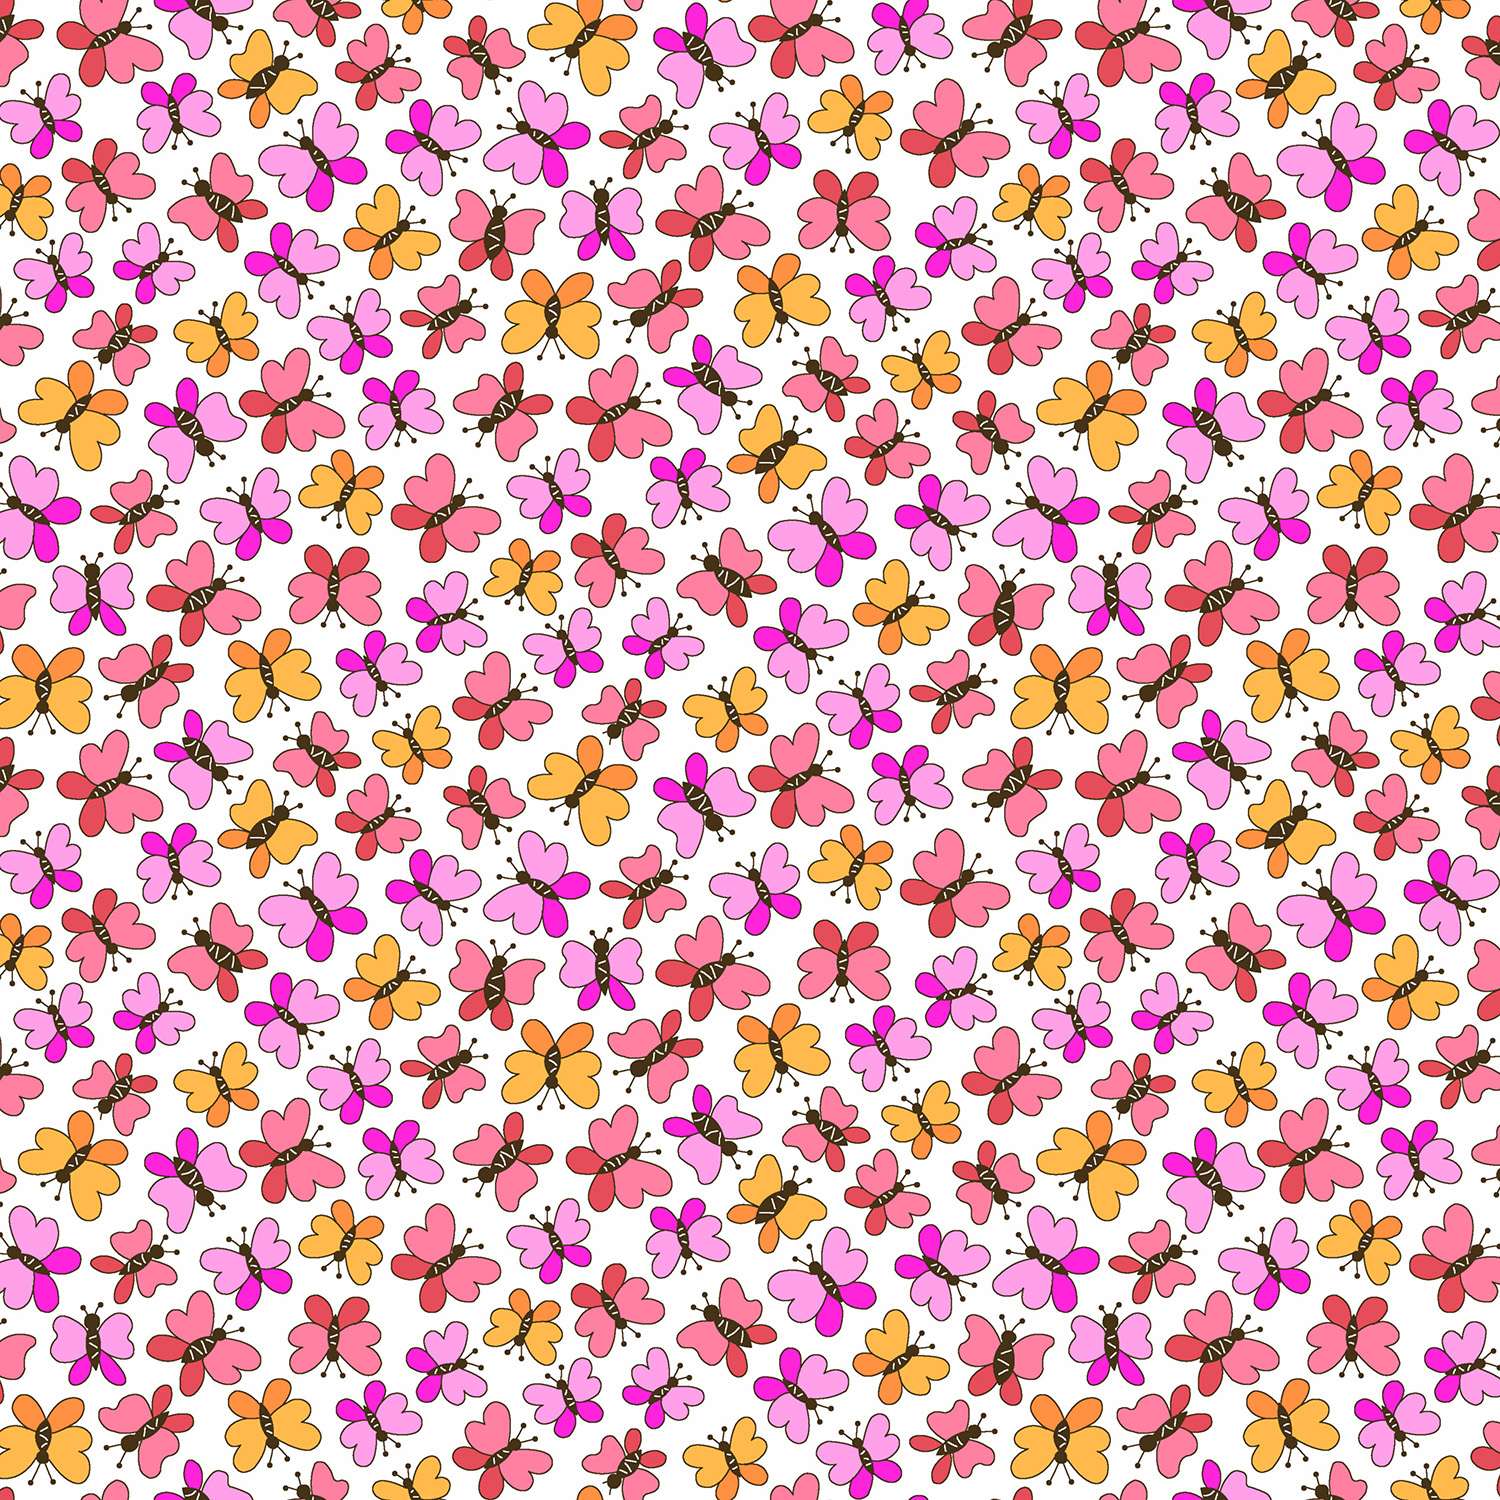 Flutter- Small Butterfly Pink